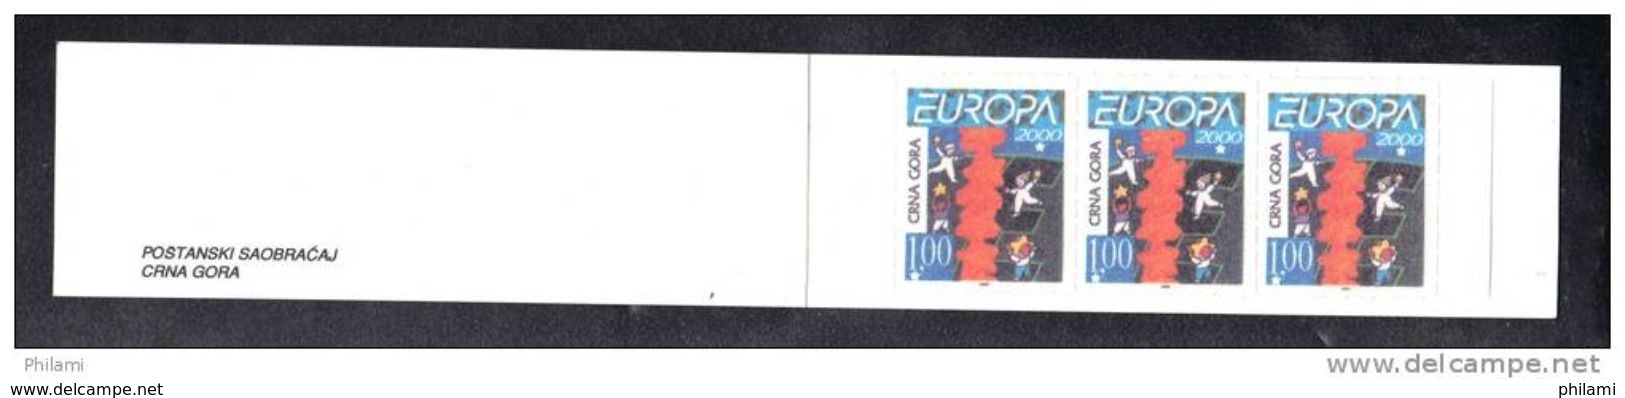 MONTENEGRO CARNET EUROPA 2000 ** MNH. (3E2-58) - 2000